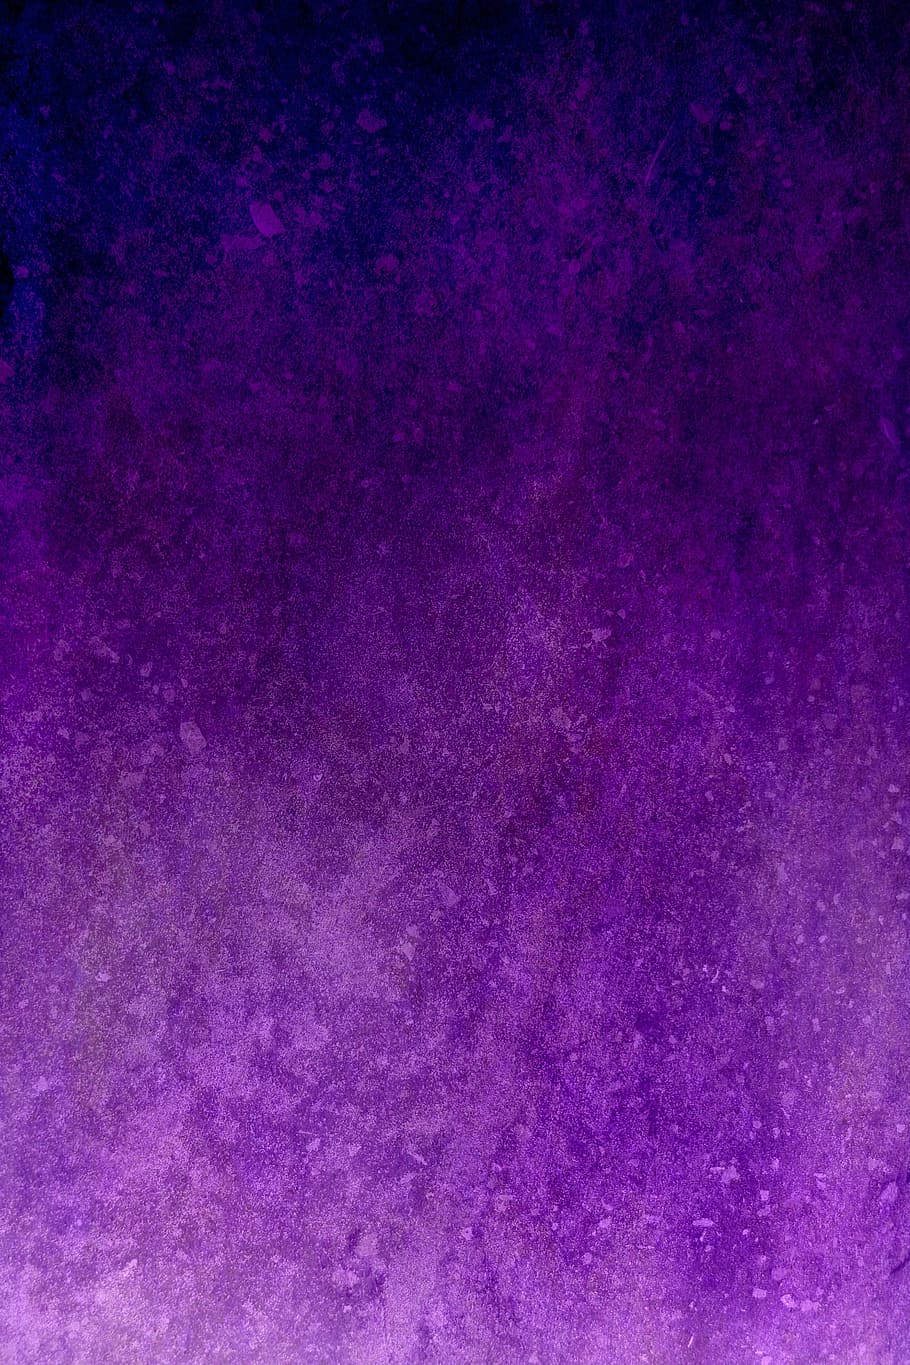 purple surface, background, grunge, texture, fabric, goth, gothic